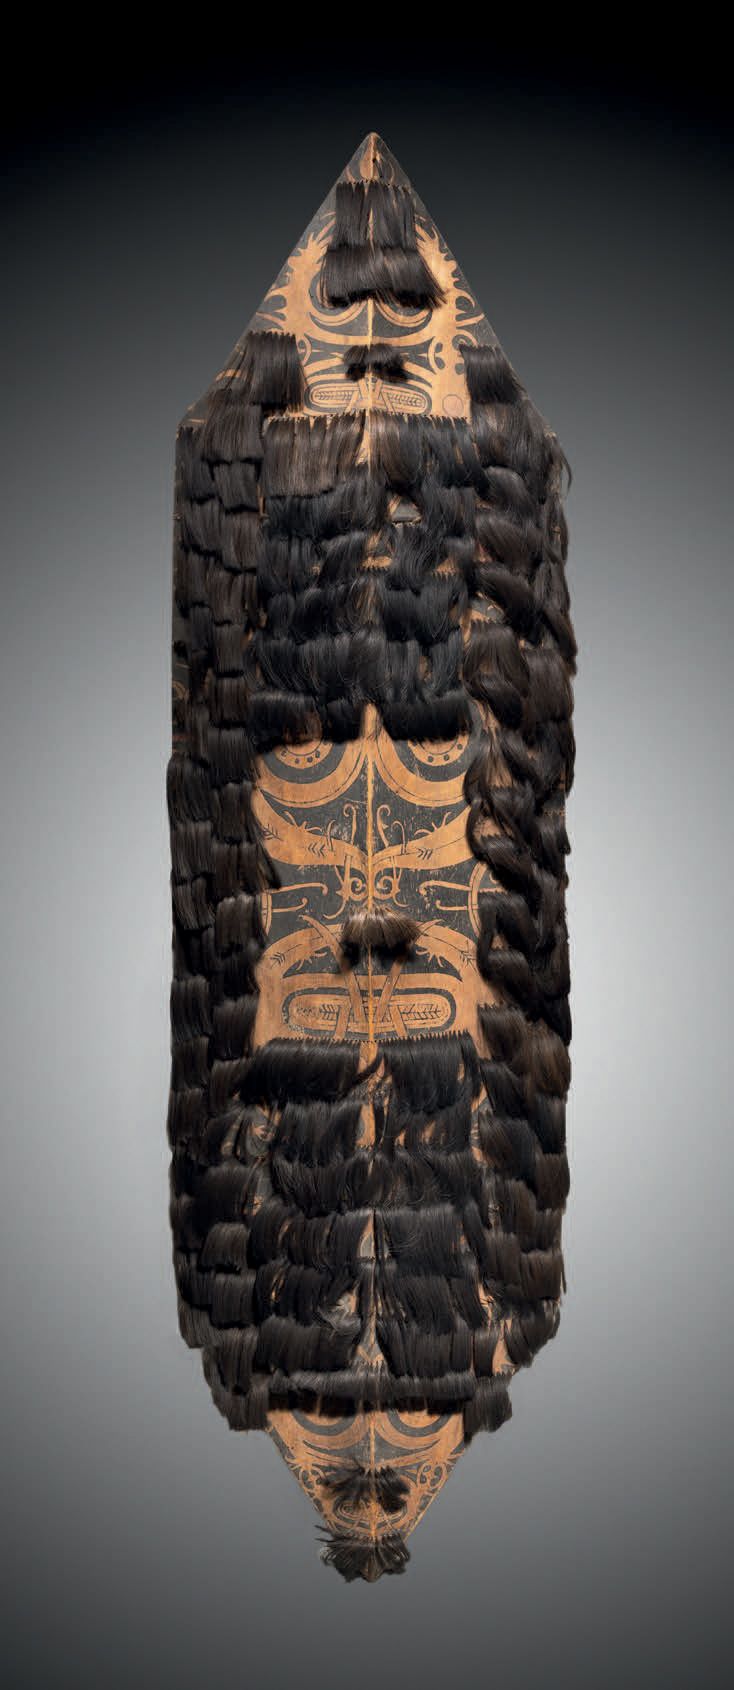 Null 
达雅克盾牌，婆罗洲，印度尼西亚

19世纪末-20世纪初

轻质木材、柳条、纤维、头发、颜料

H.135 cm - L. 37

达雅克盾牌，婆罗&hellip;